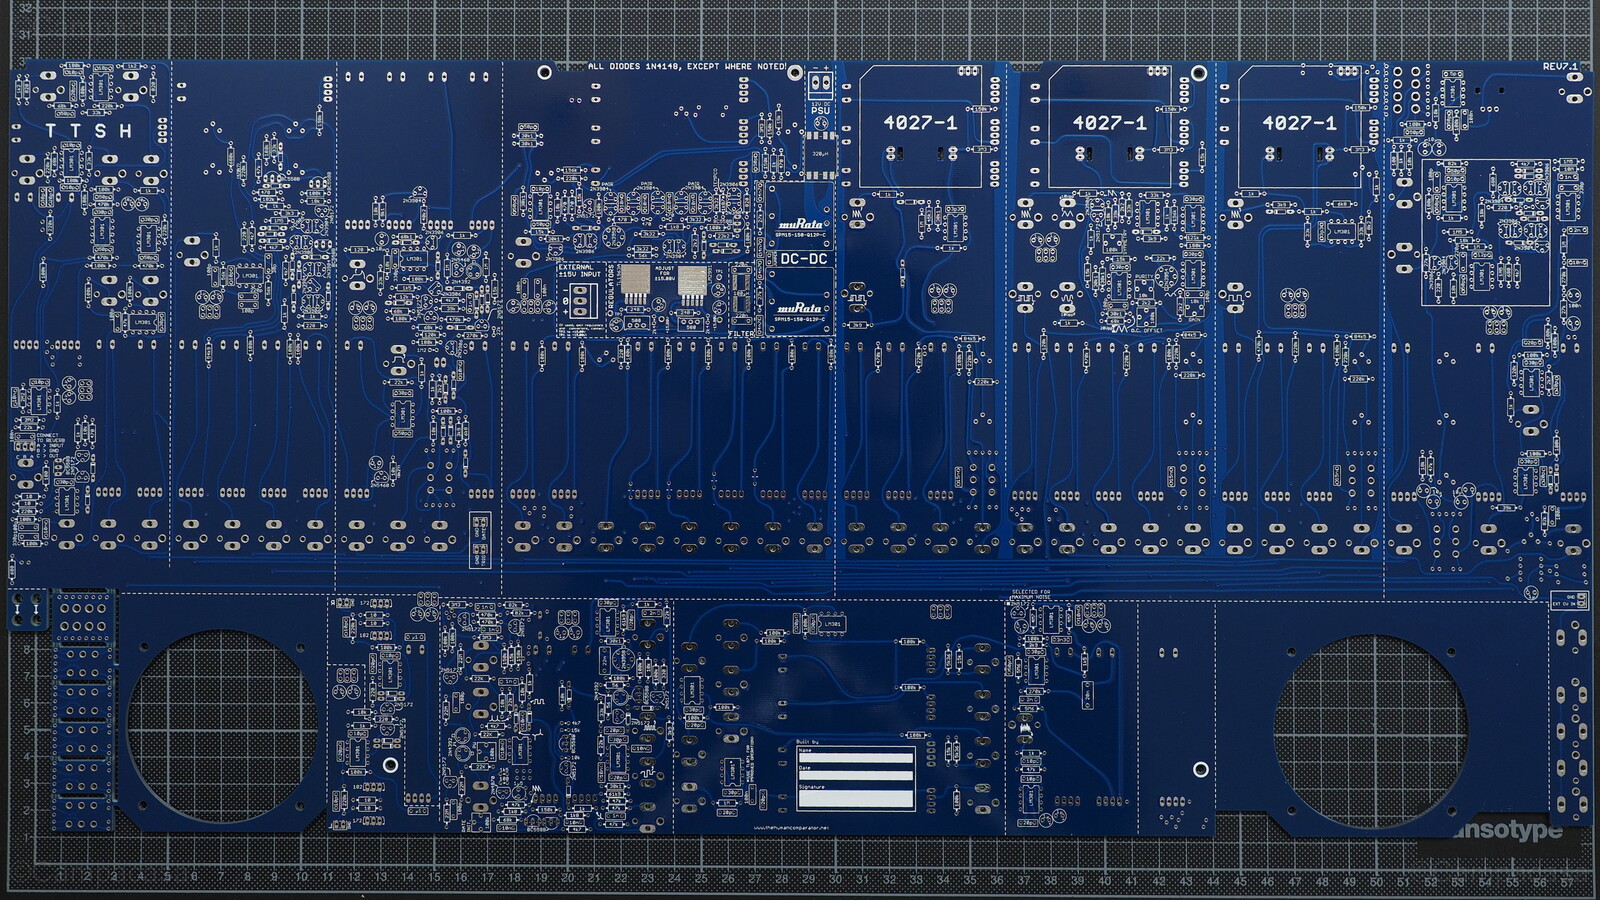 TTSH Circuit Board, component side